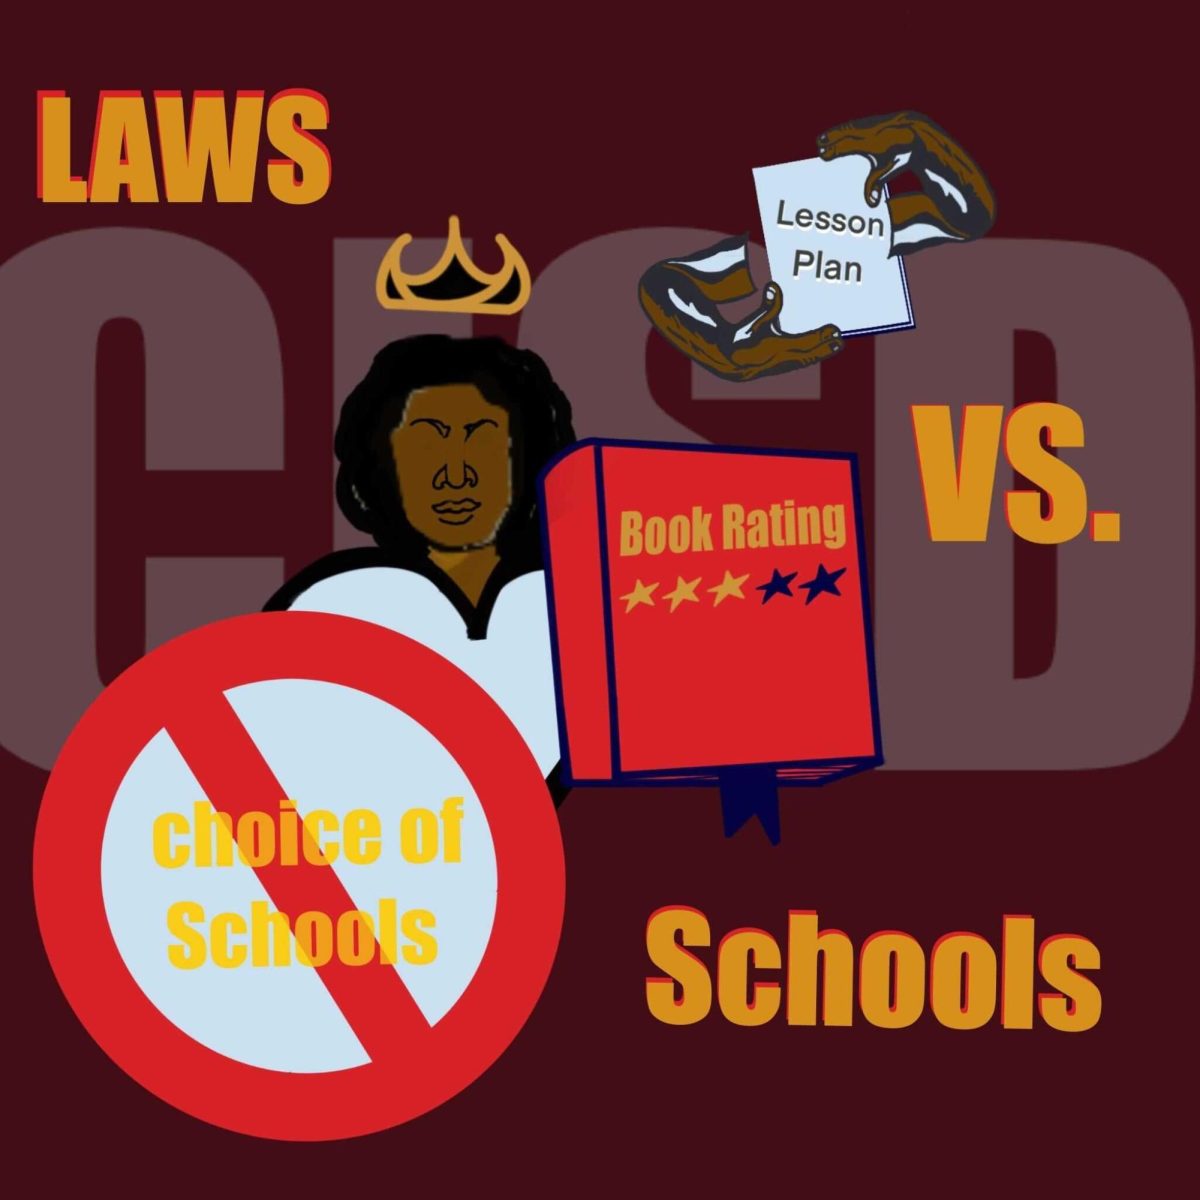 New+state+laws+impact+local+schools%2C+teachers